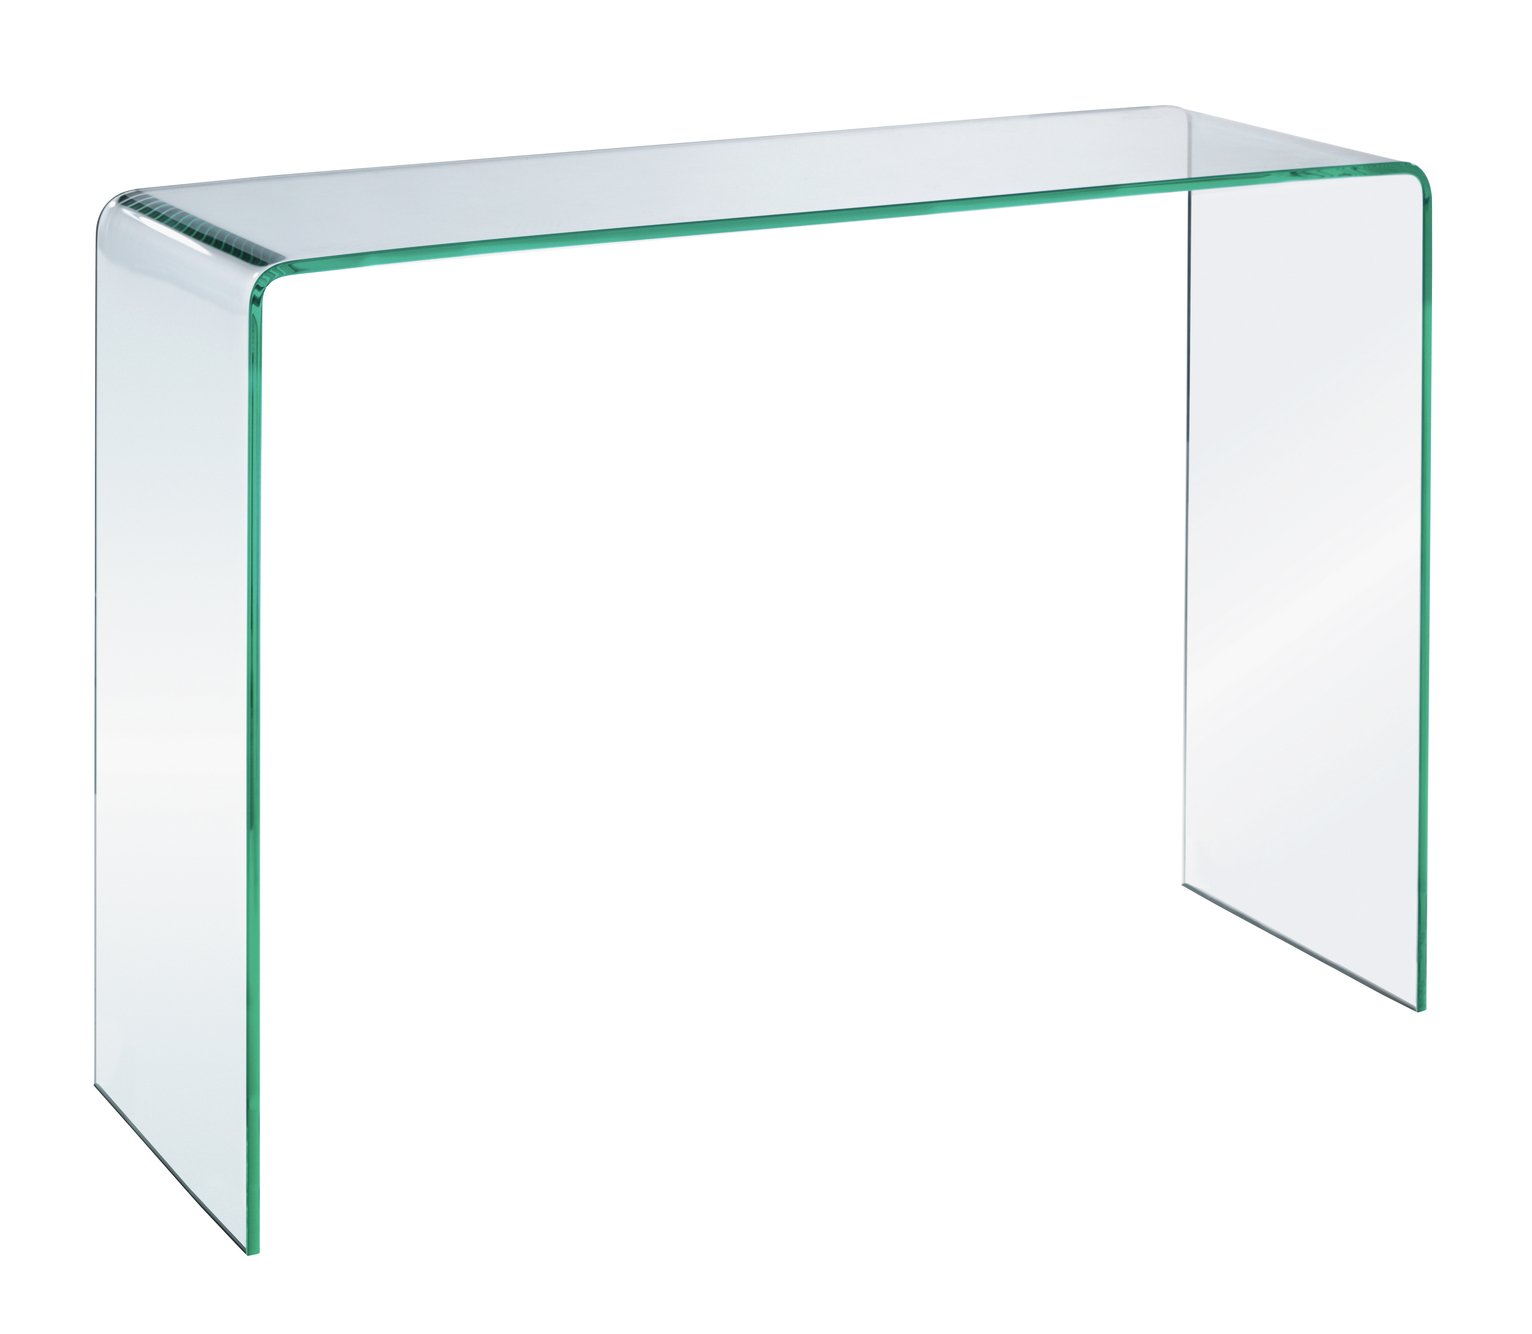 Habitat Gala Tempered Glass Console Table